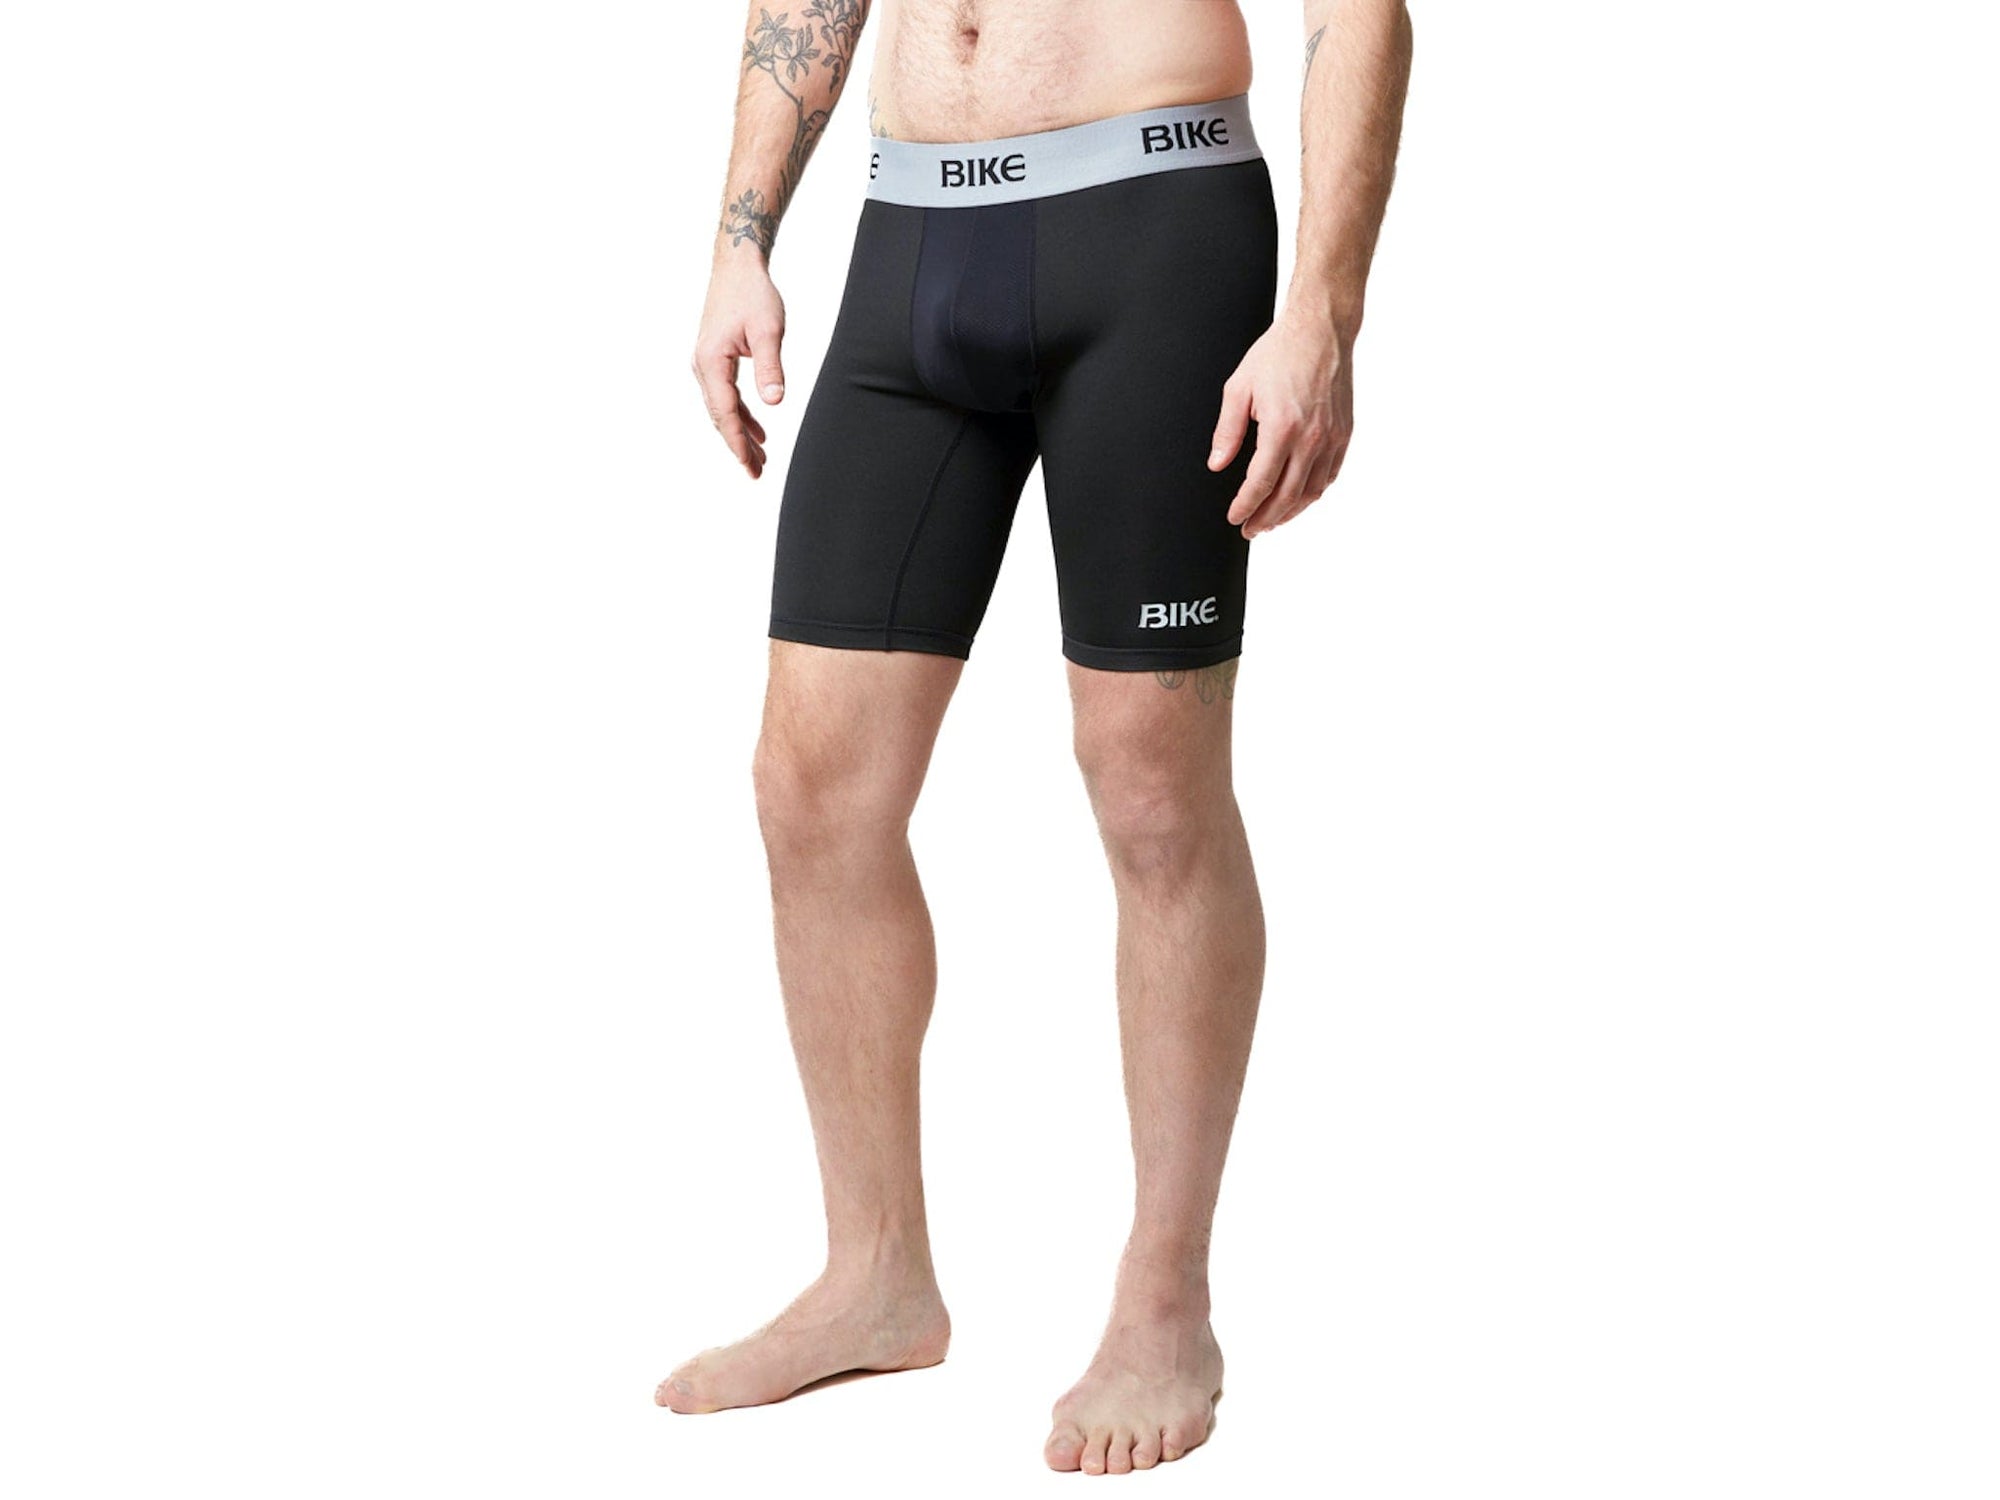 Black BIKE® compression shorts